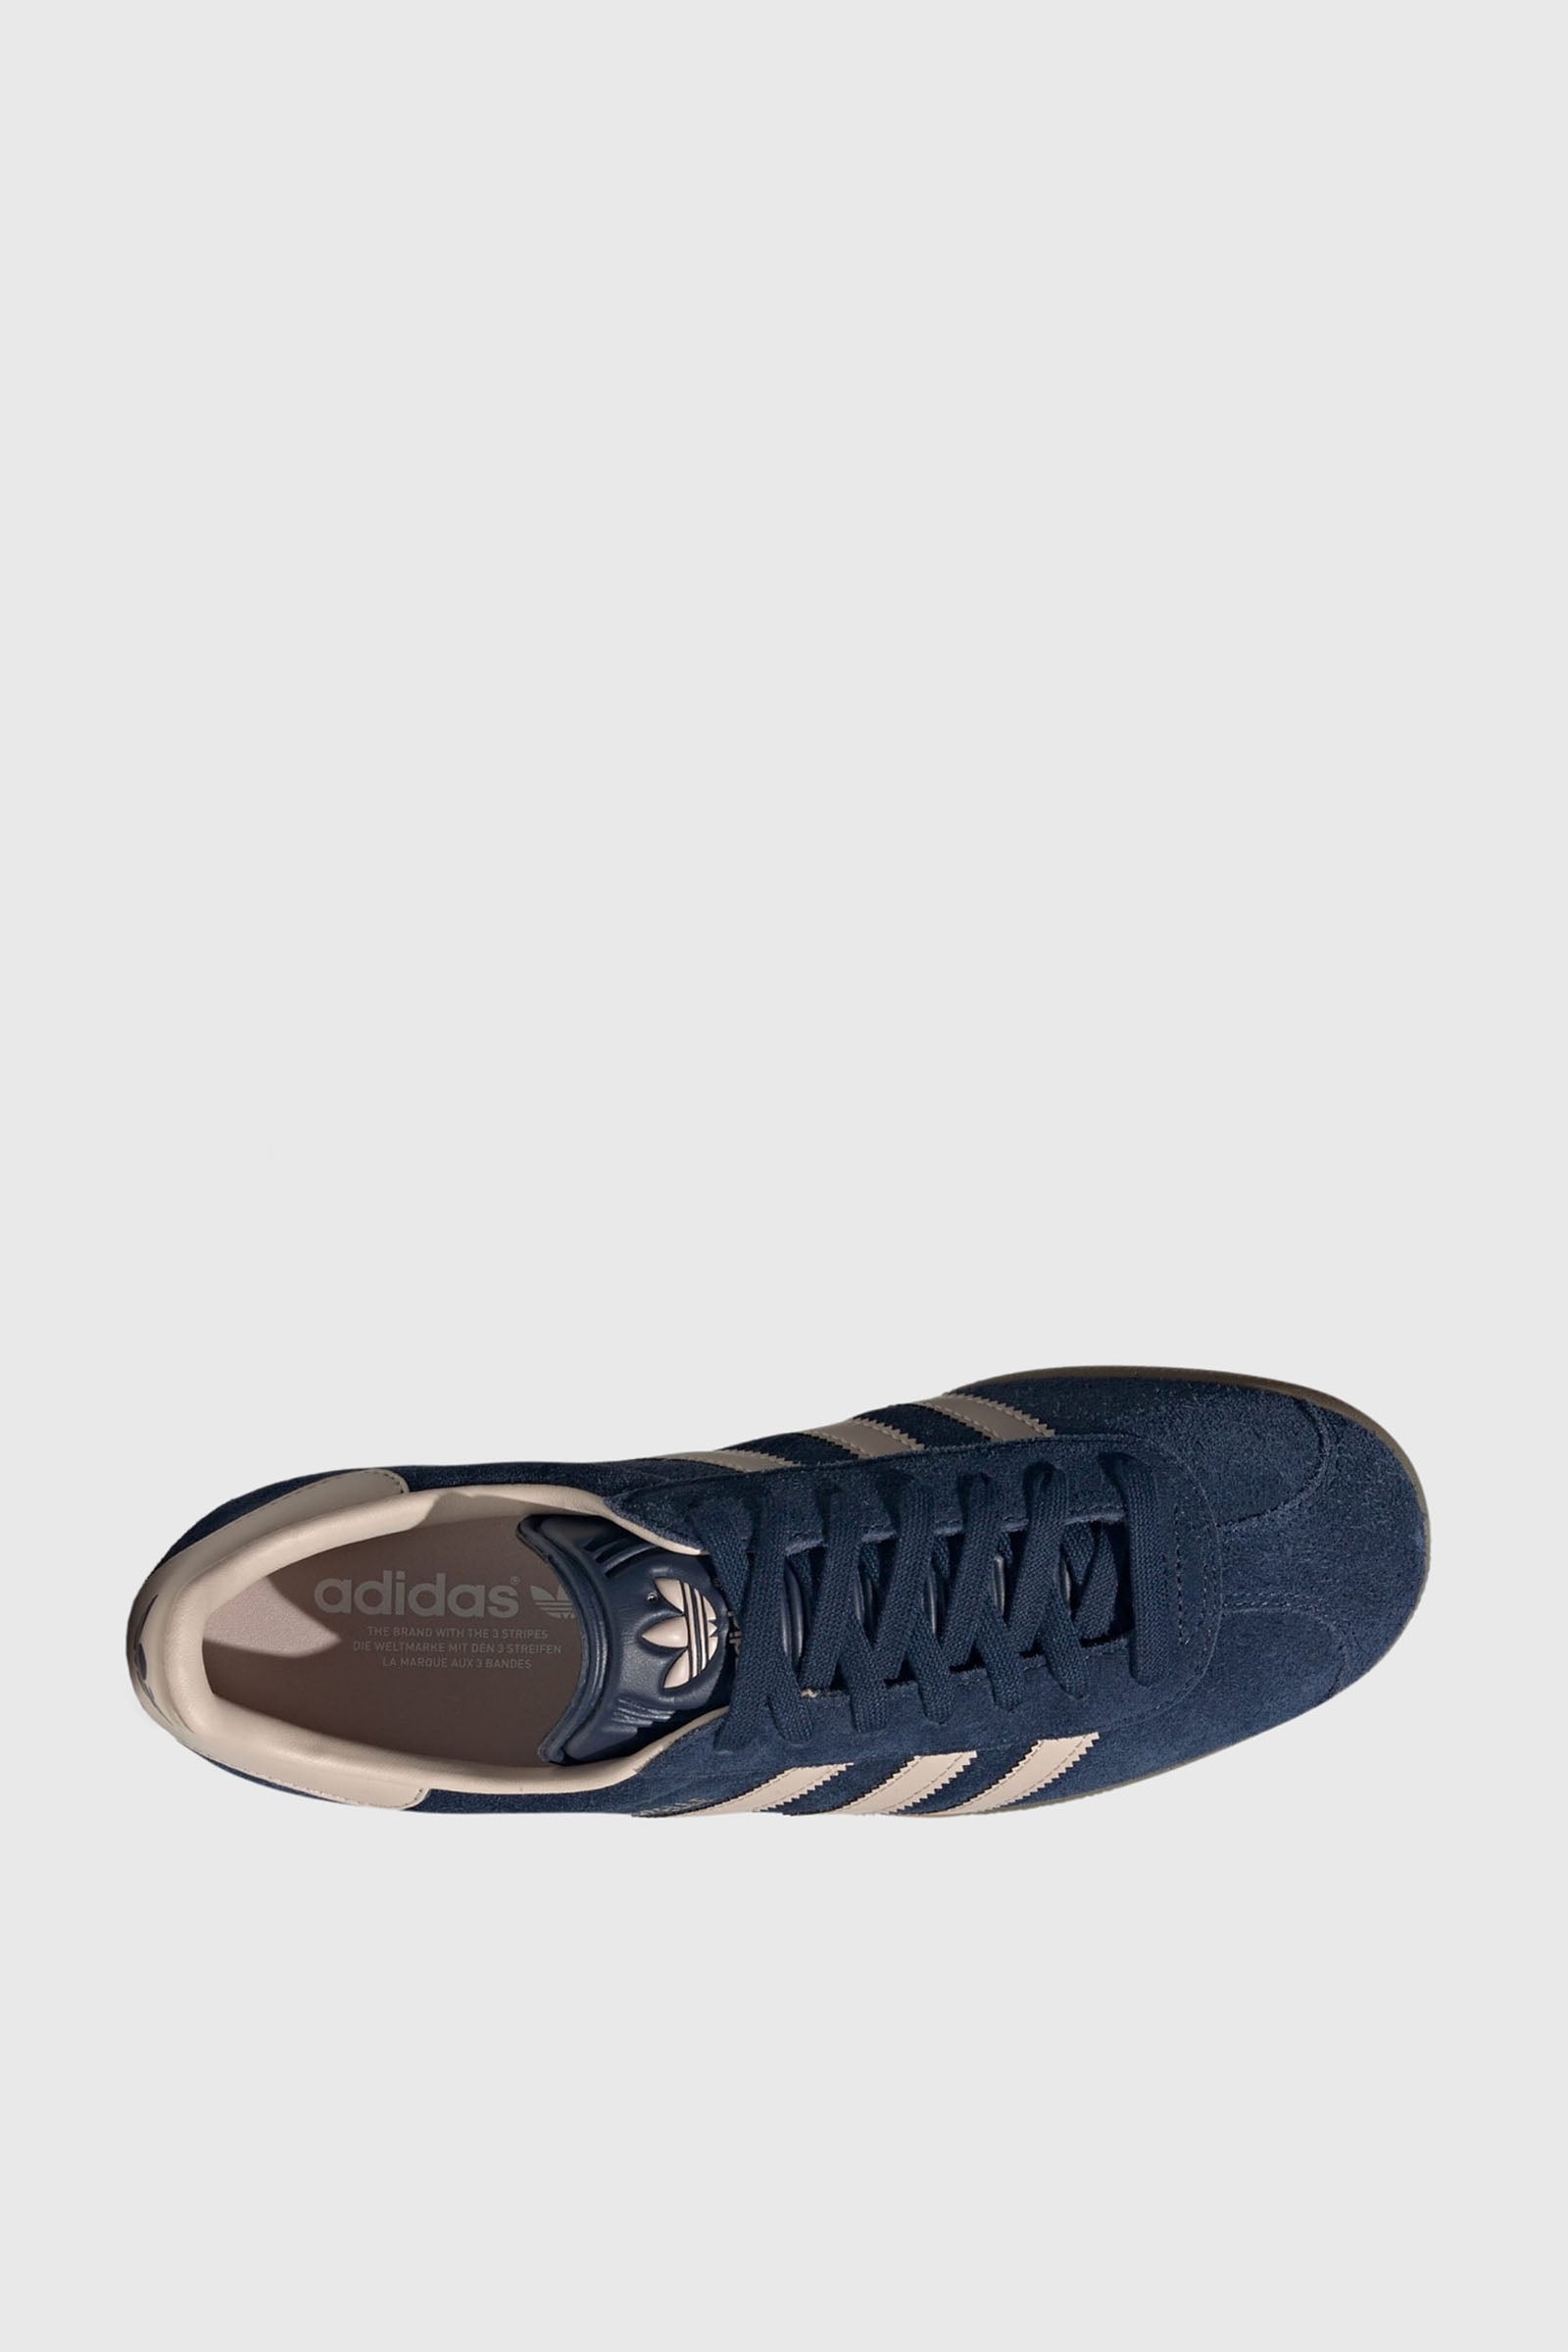 Adidas Originals Synthetic Blue Gazelle Sneaker - 5